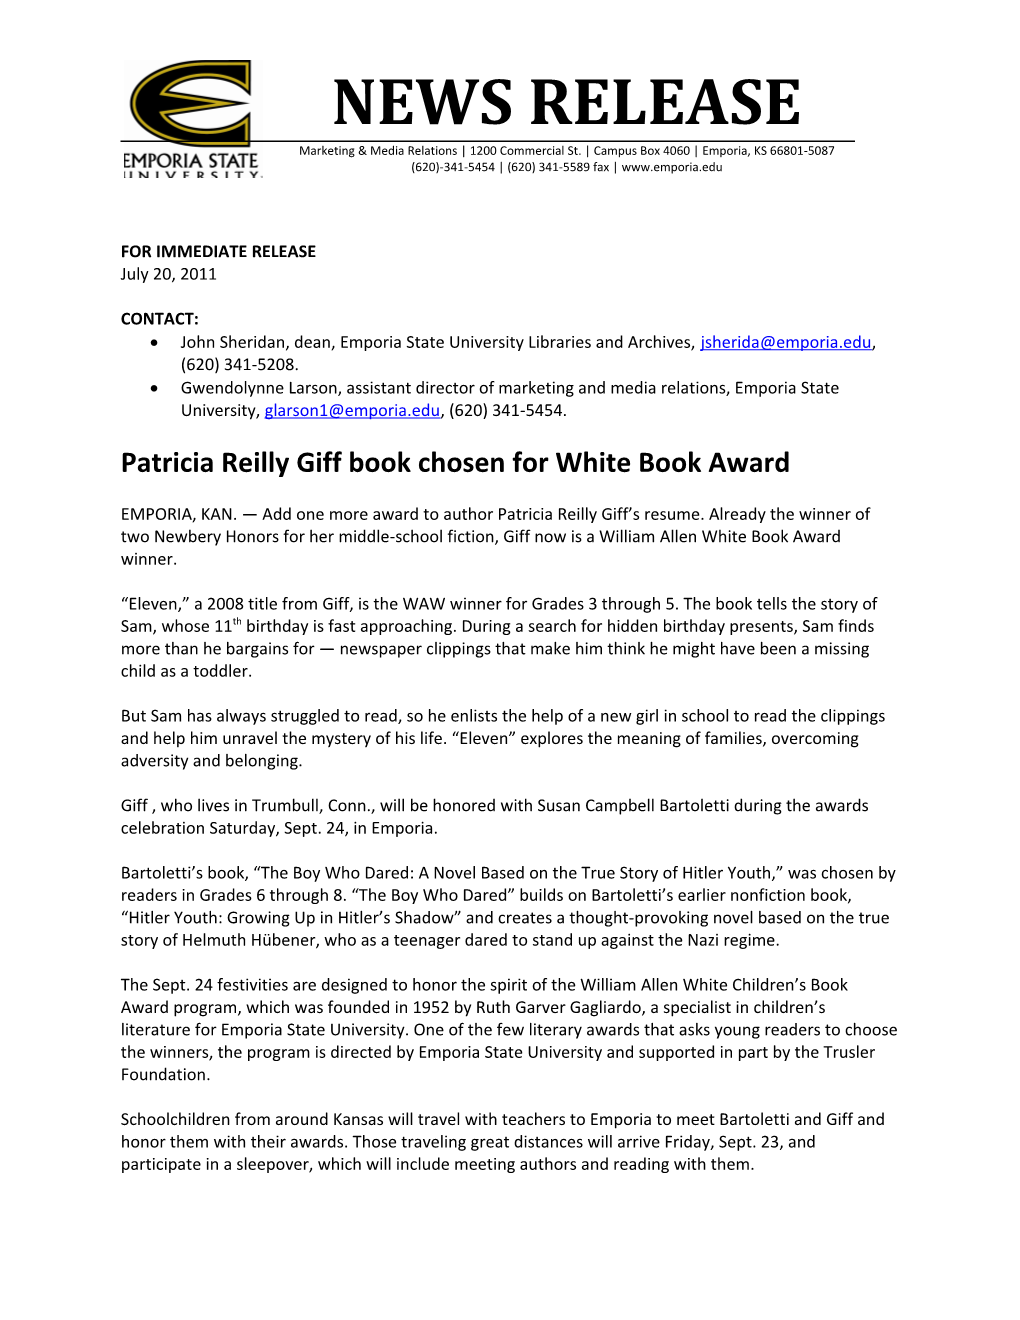 Patricia Reilly Giff Book Chosen for White Book Award